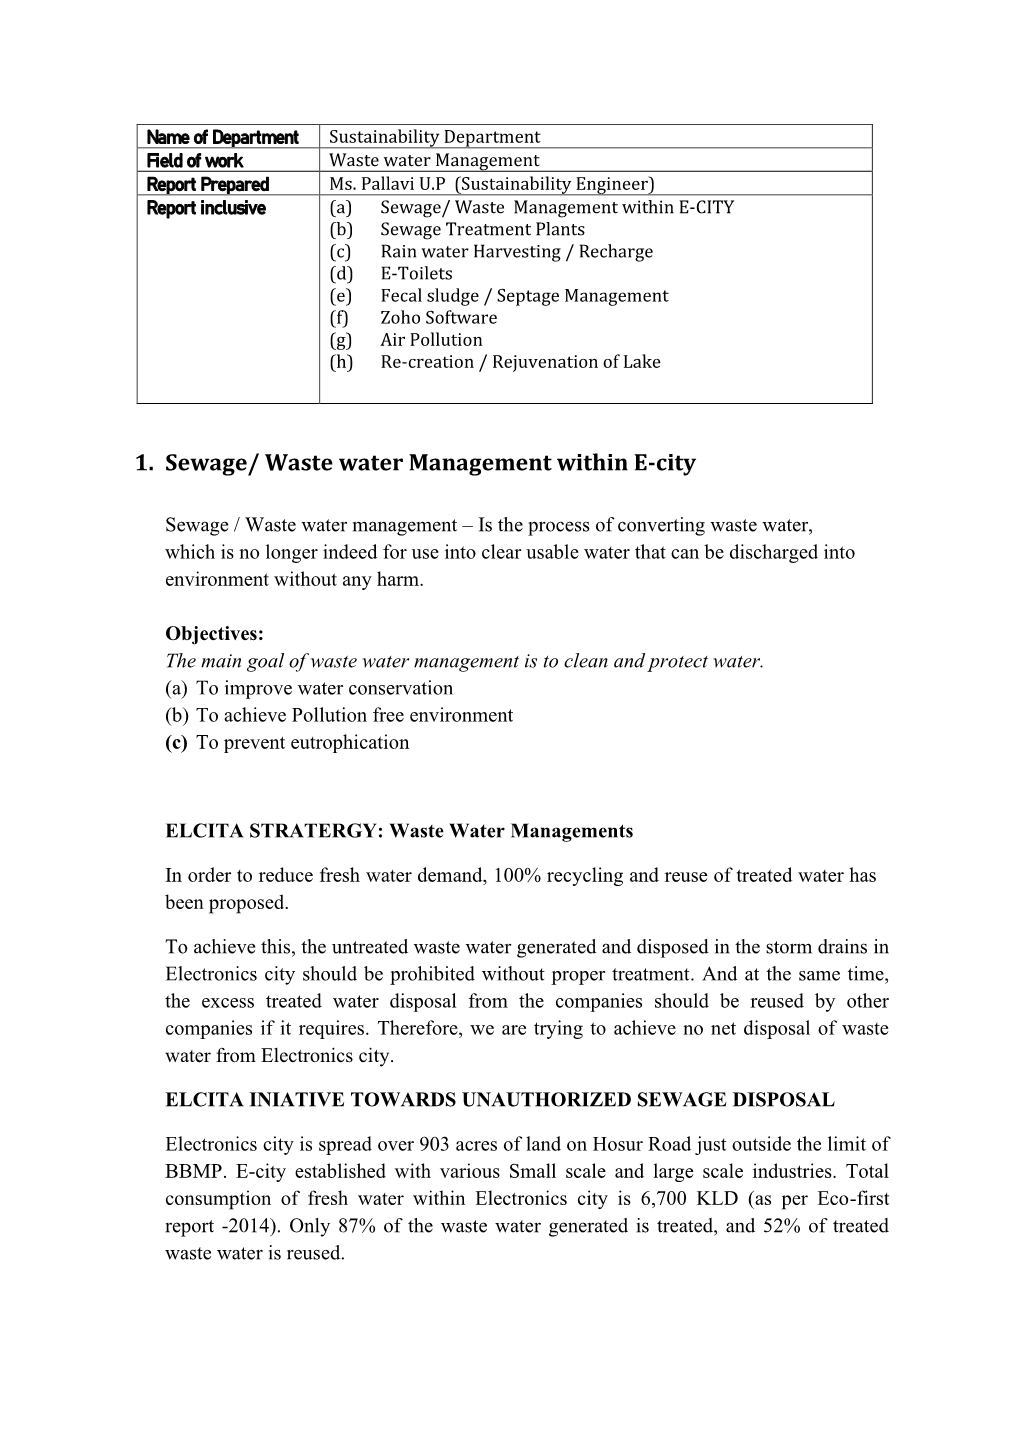 1. Sewage/ Waste Water Management Within E-City